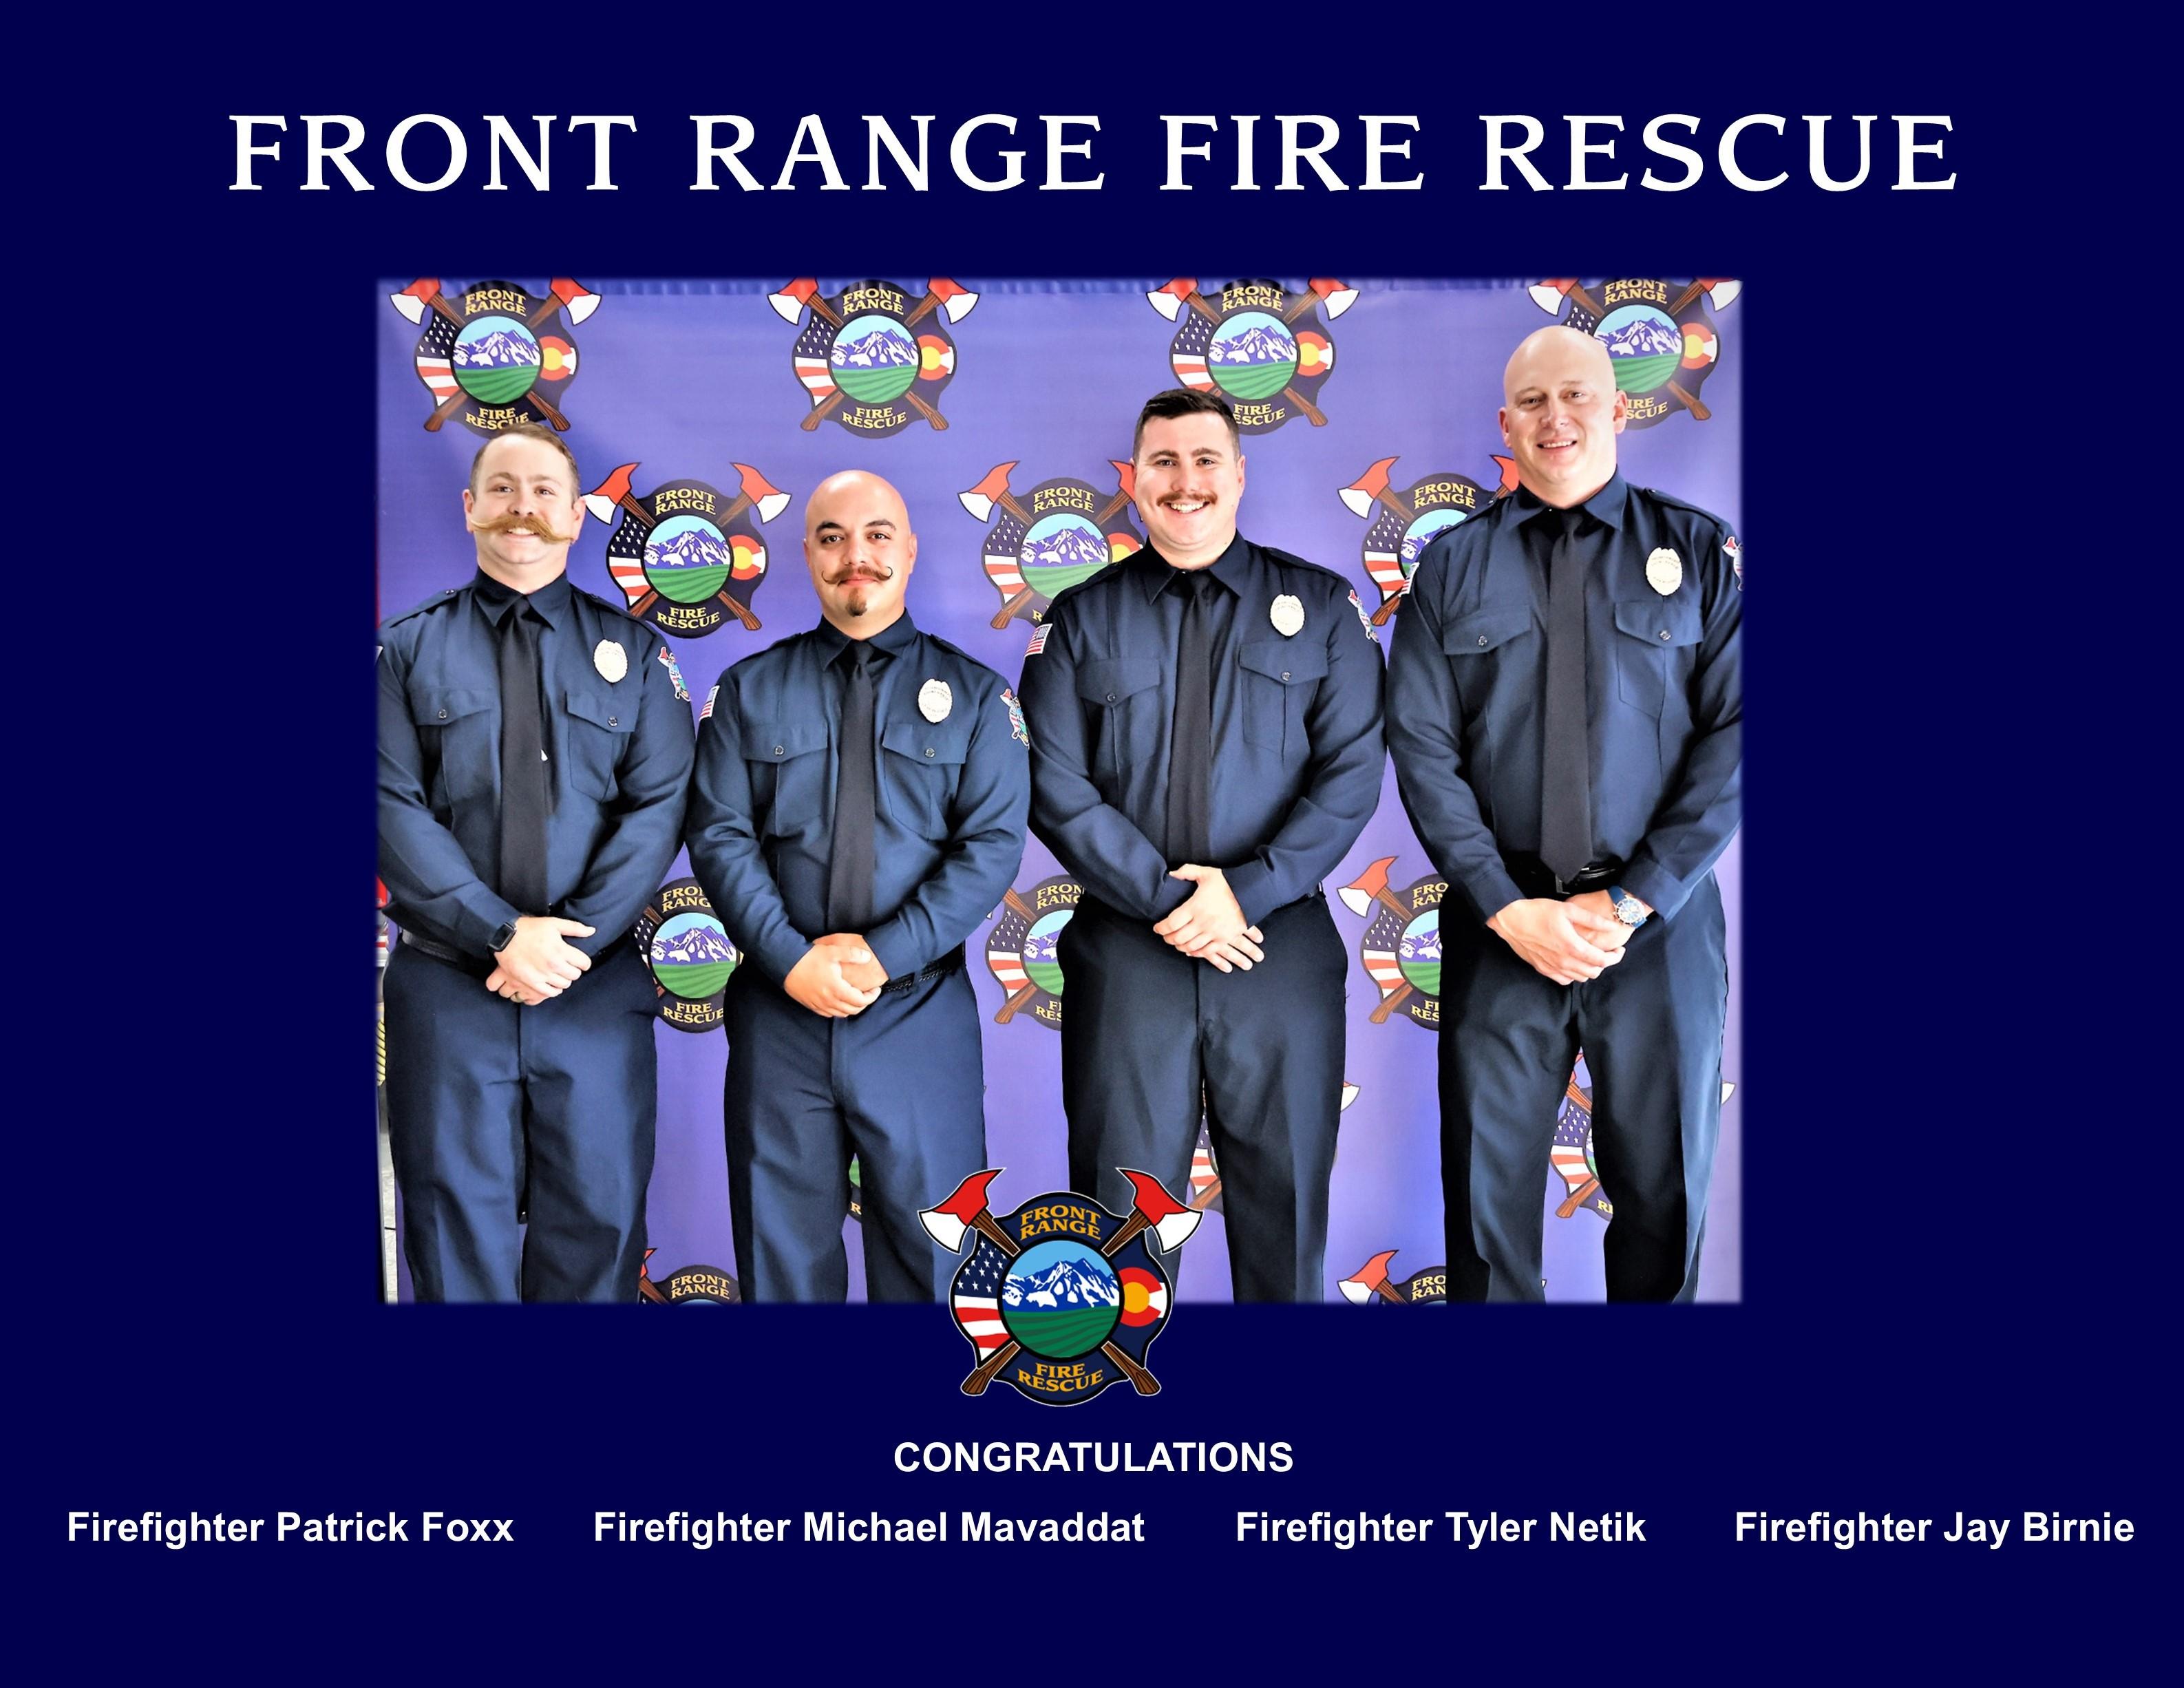 Four Firefighters at Graduation including Patrick Foxx, Michael Mavaddat, Tyler Netik and Jay Birnie